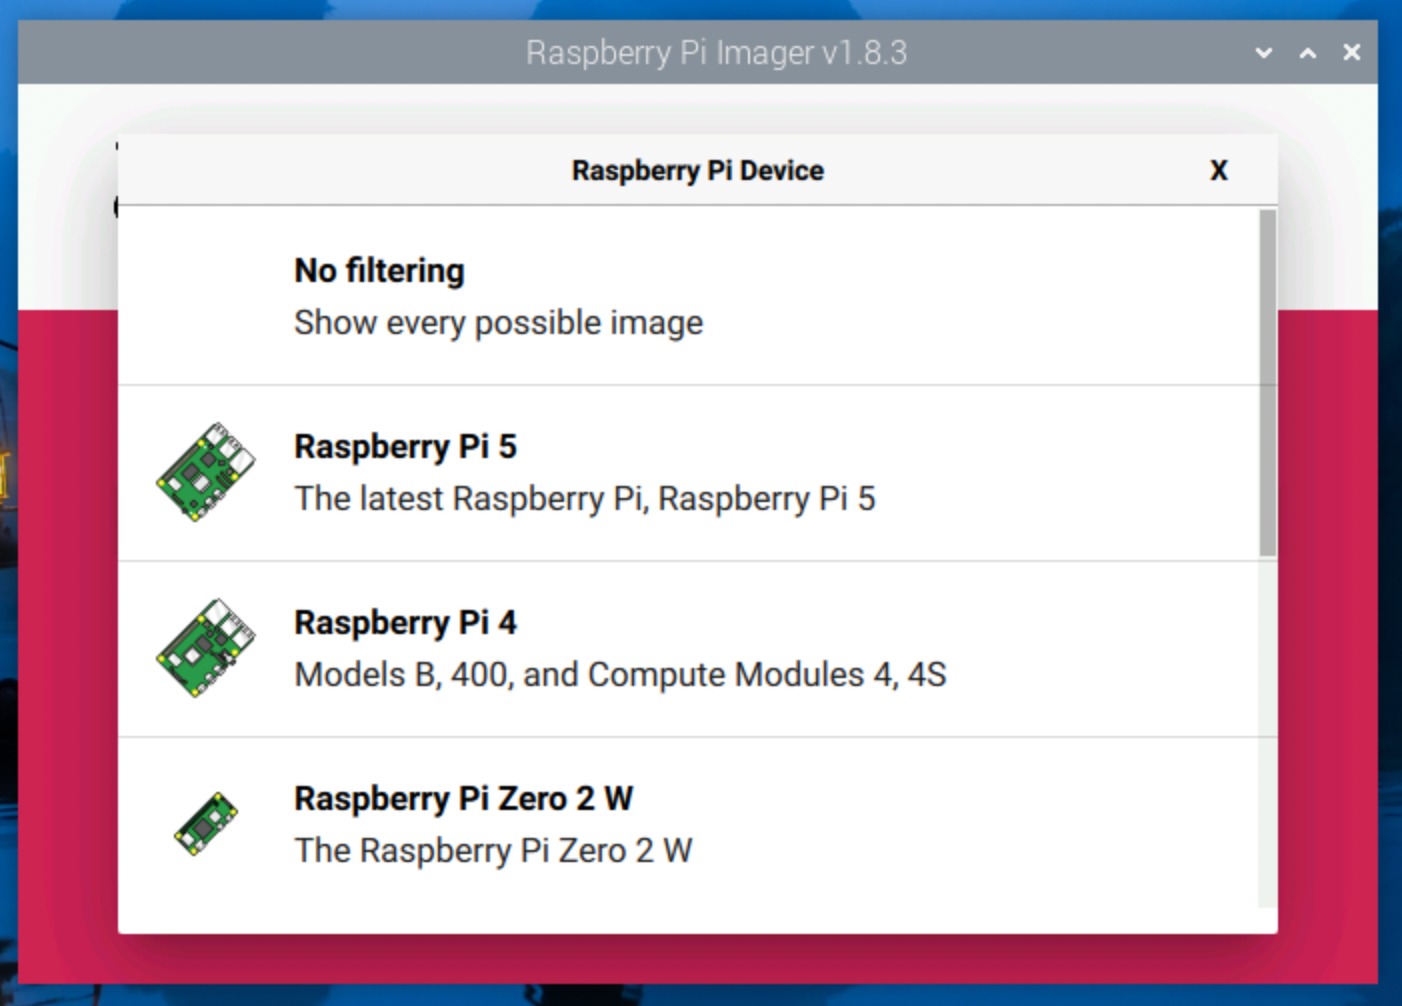 Gary Explains - Adding NVMe Storage to your Raspberry Pi 5 - No